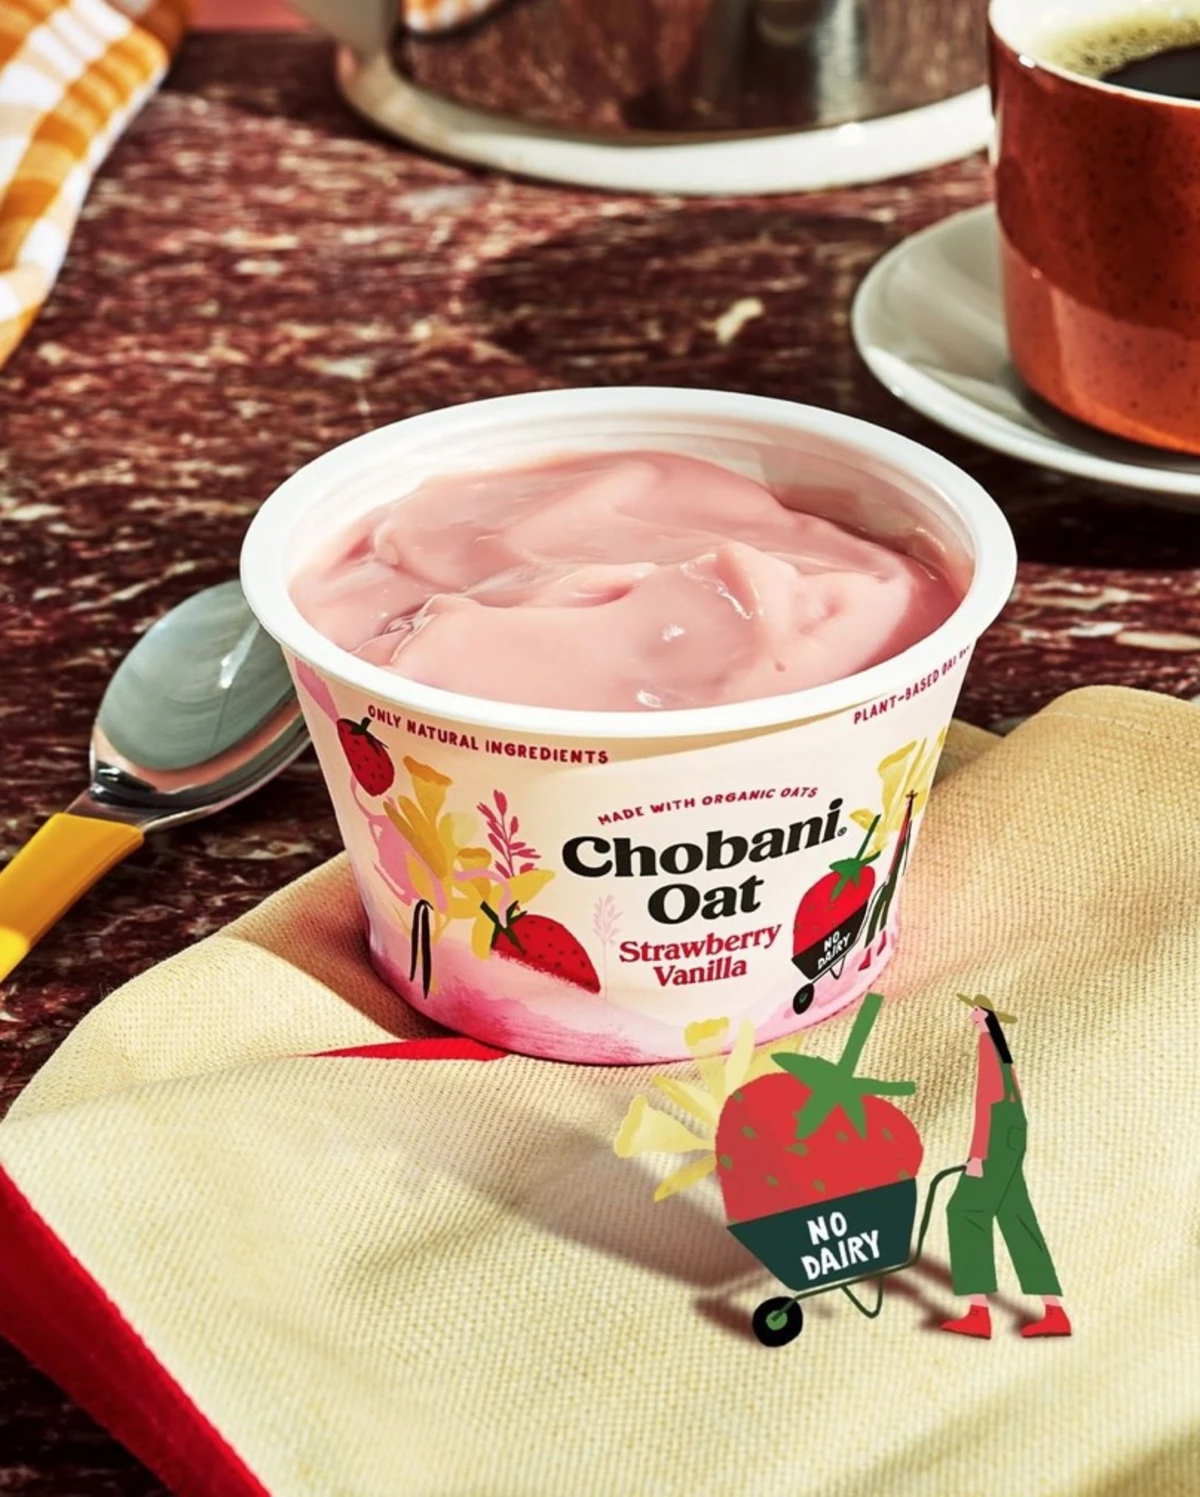 Greek Yogurt Maker Chobani Launches Oat Yogurt and Milk